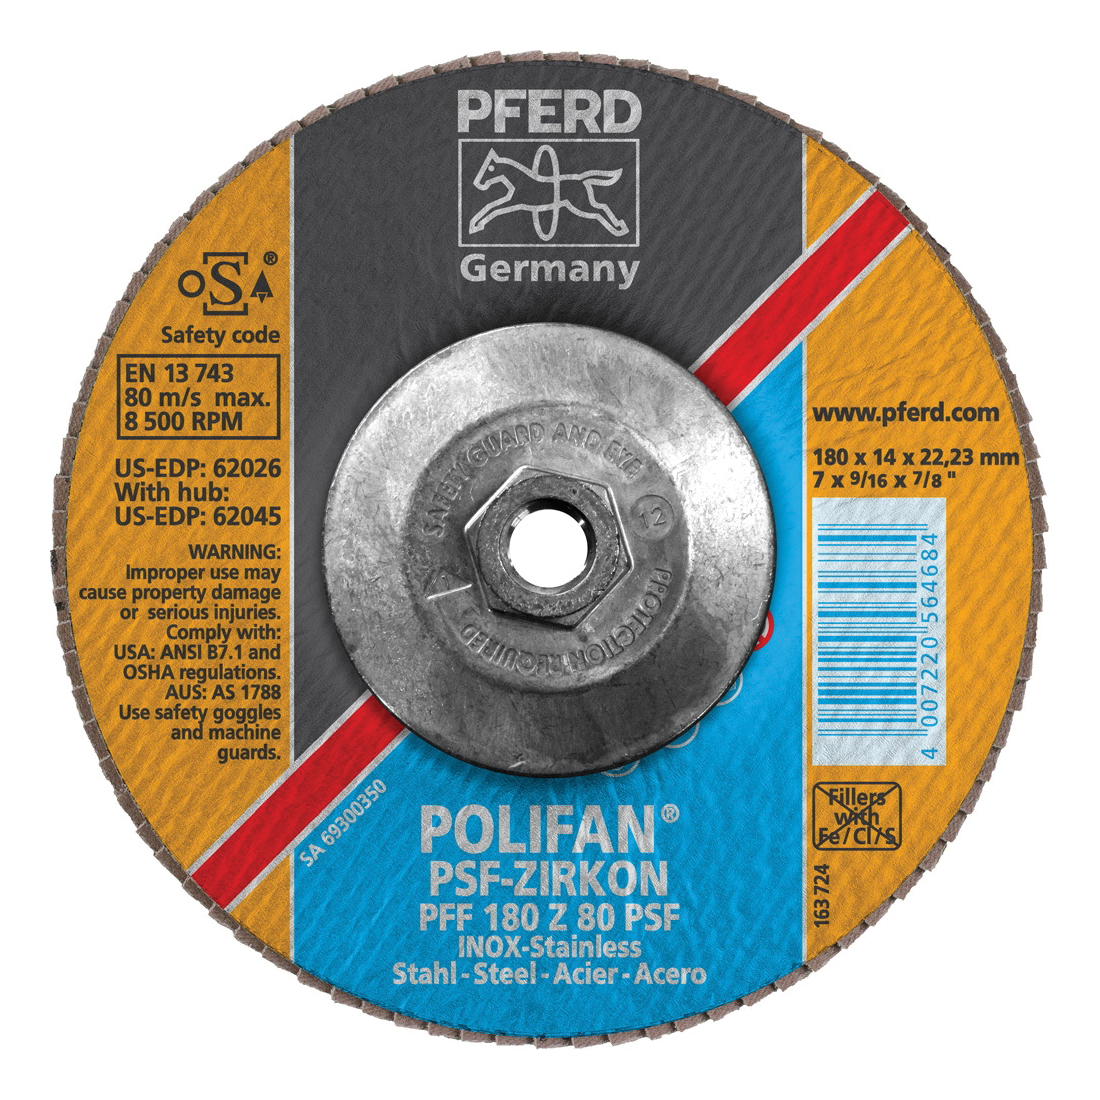 PFERD Polifan® 62045 Universal Line PSF-Z Threaded Coated Abrasive Flap Disc, 7 in Dia, 80 Grit, Zirconia Alumina Abrasive, Type 27 Flat Disc